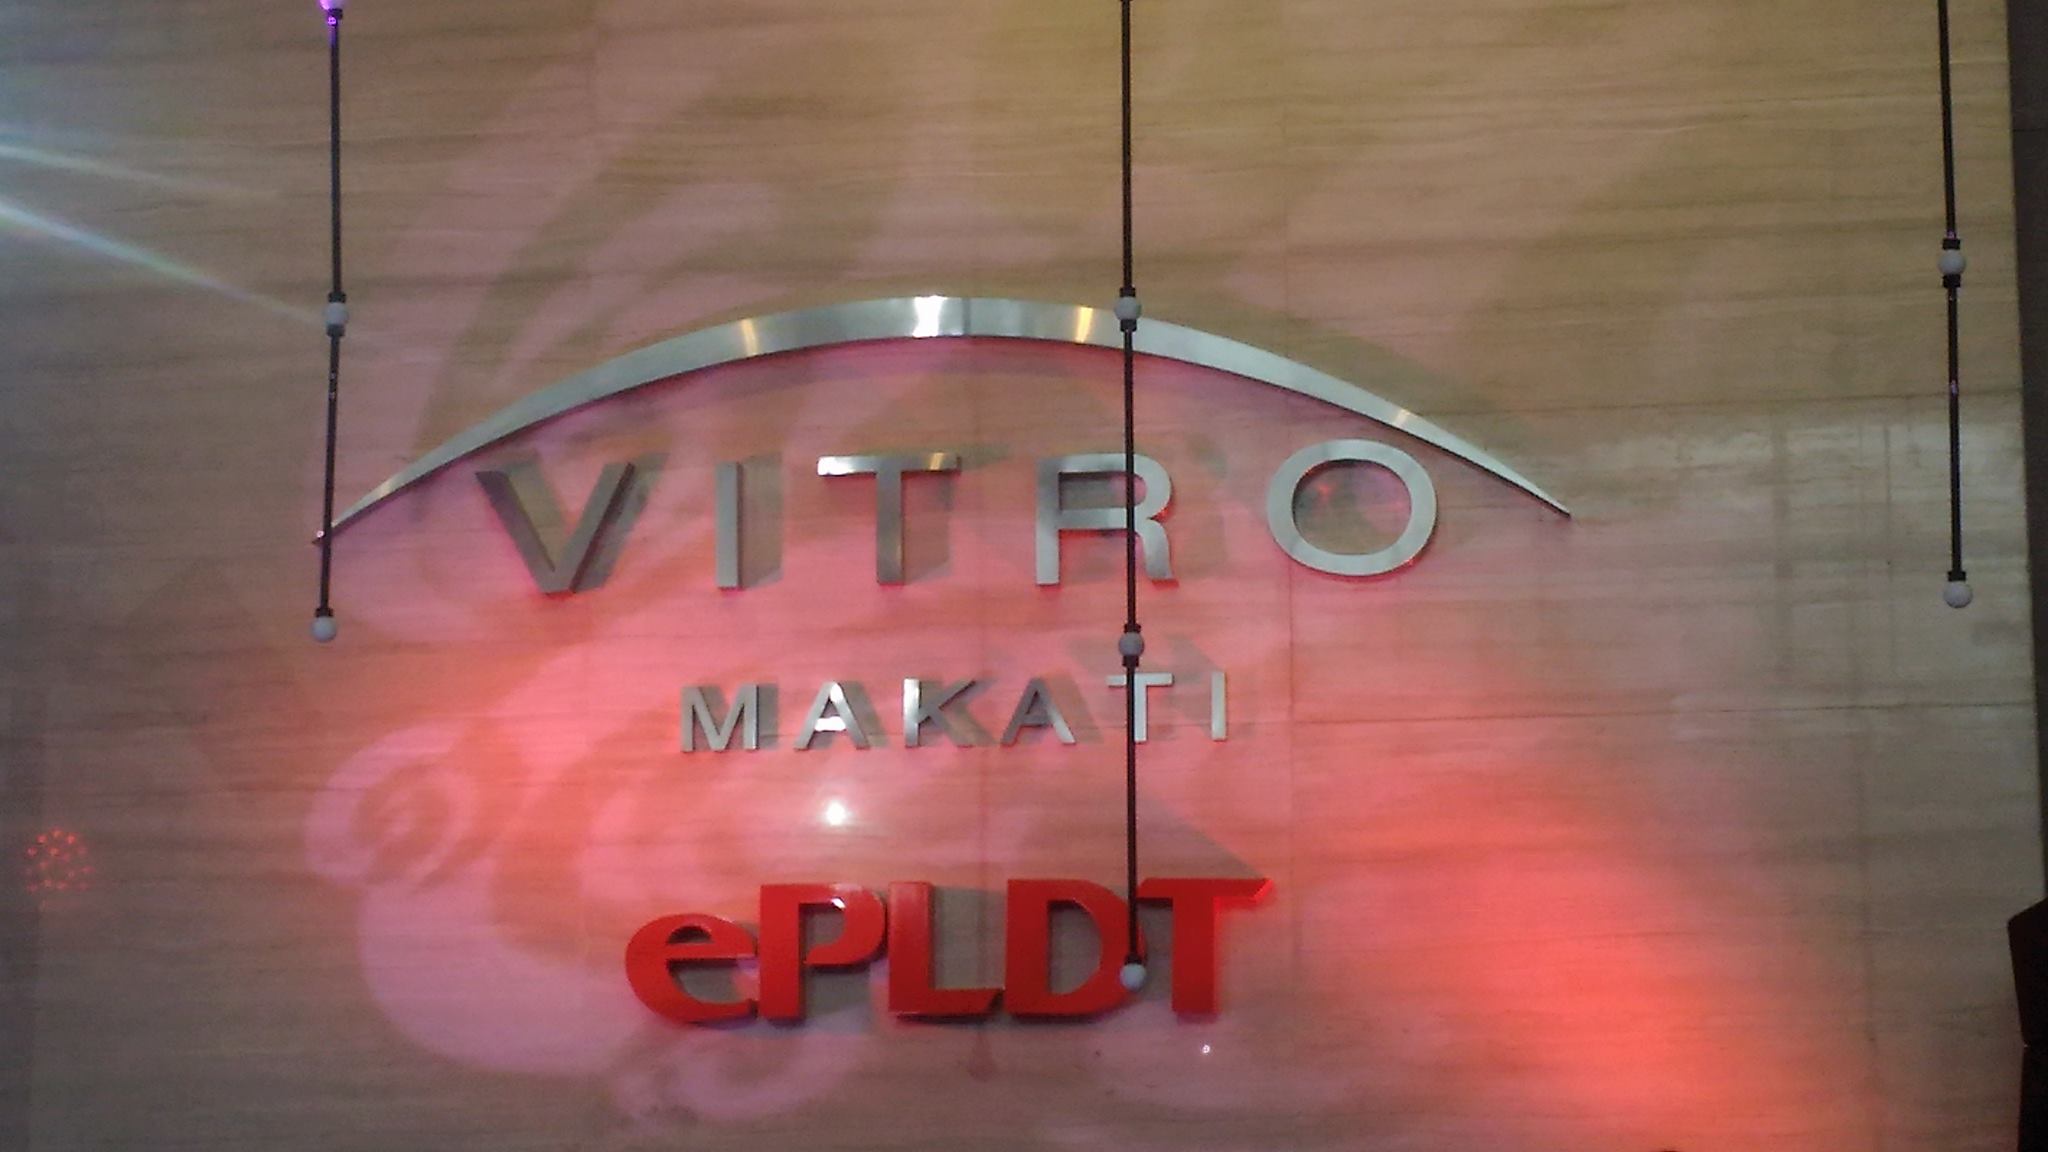 PLDT Opens VITRO Data Center in Makati the Biggest in Philippines